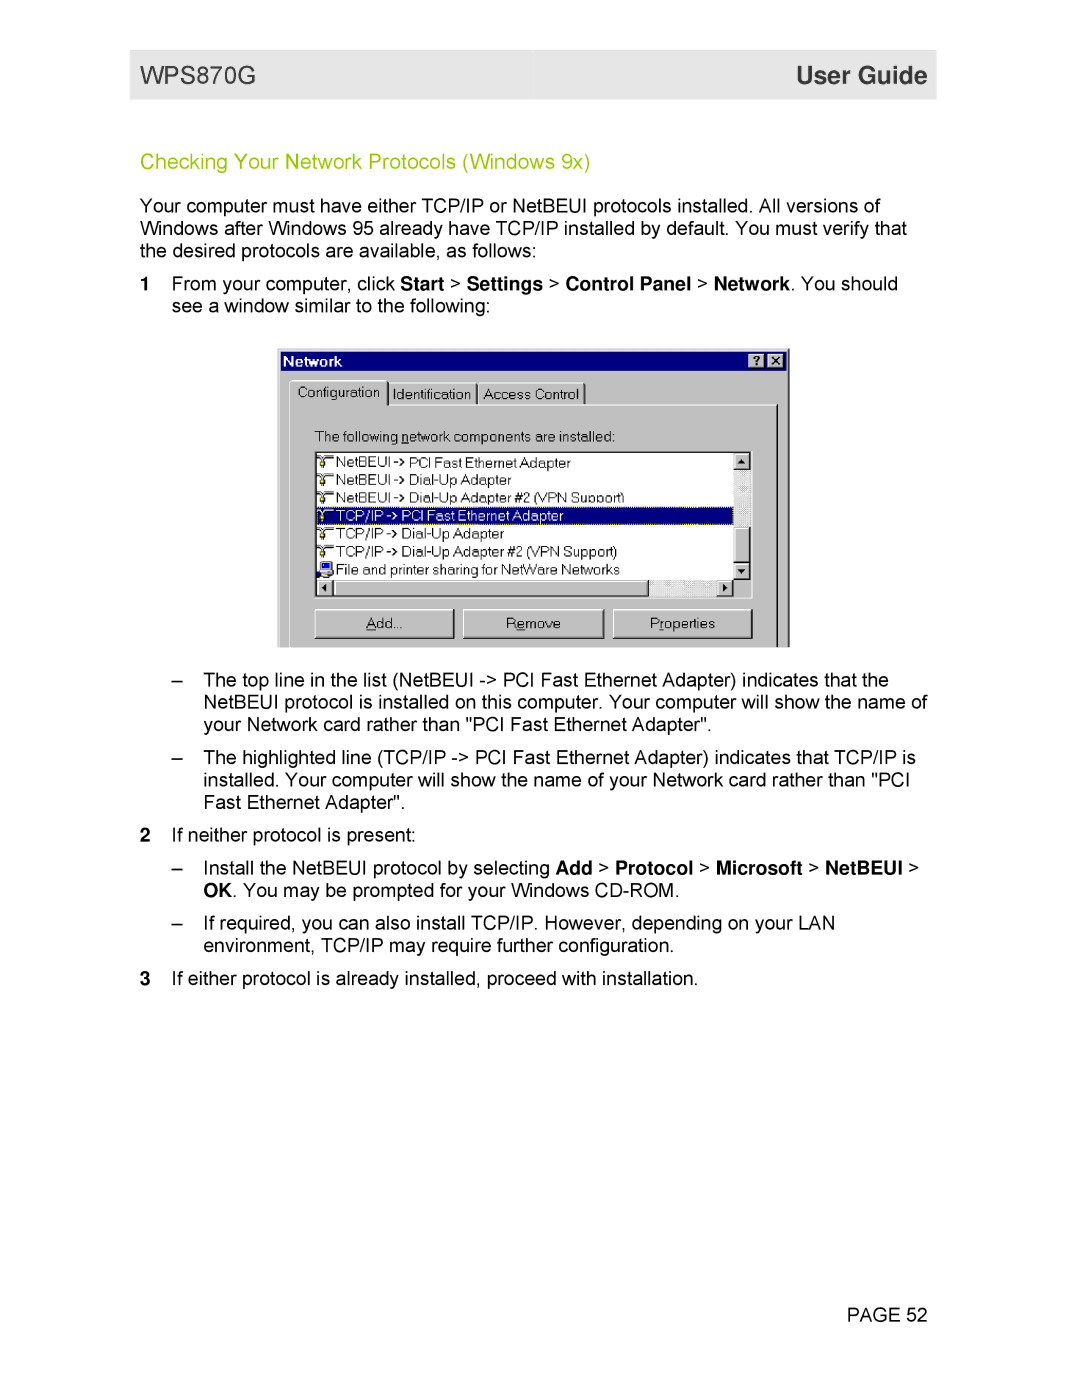 Motorola WPS870G manual Checking Your Network Protocols Windows 